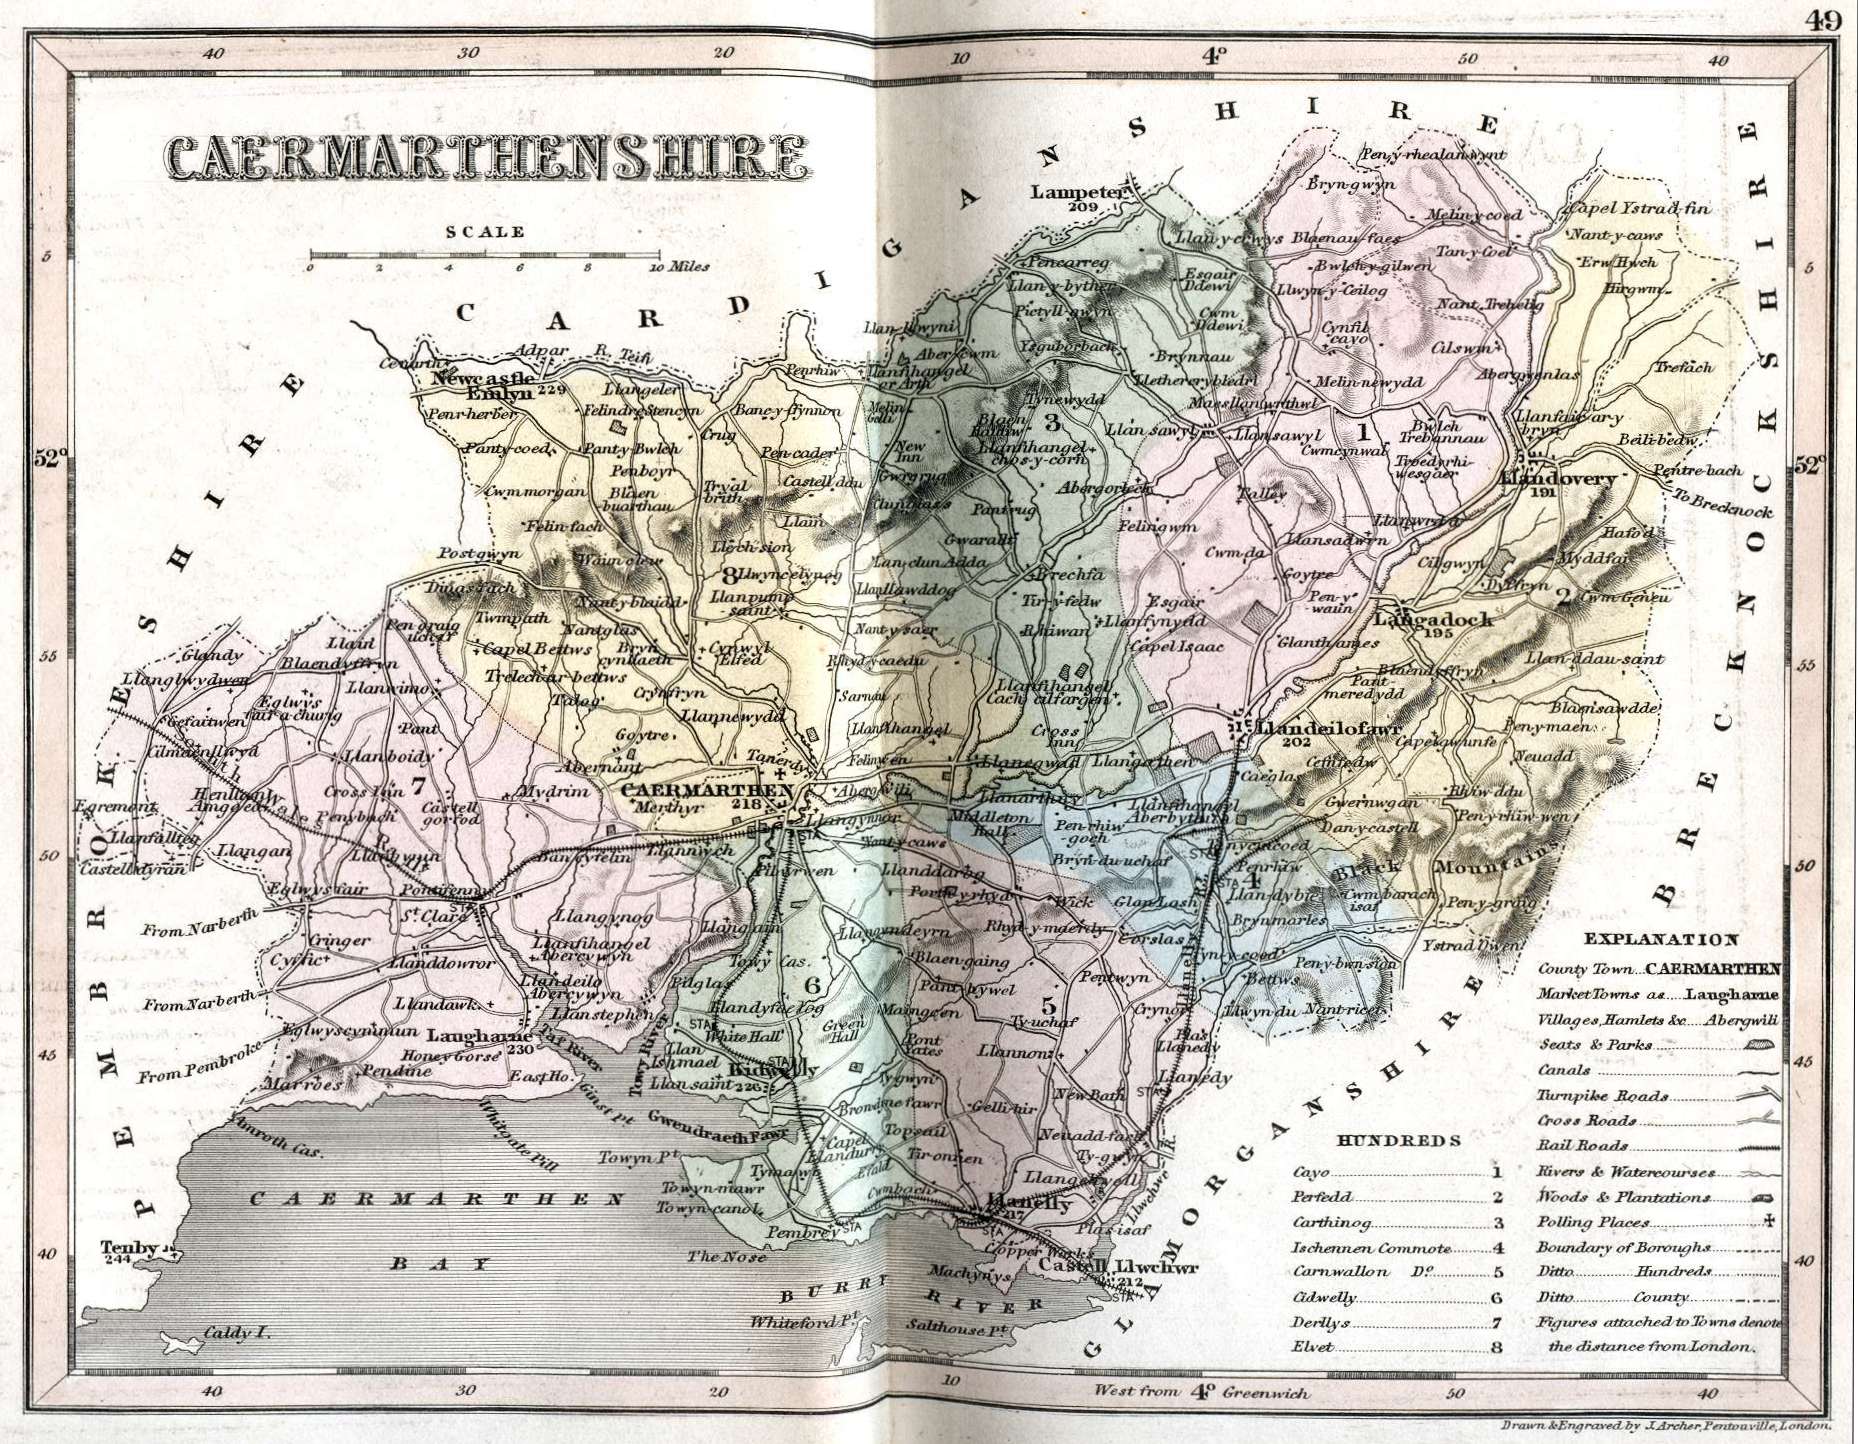 Carmarthenshire (505 K)